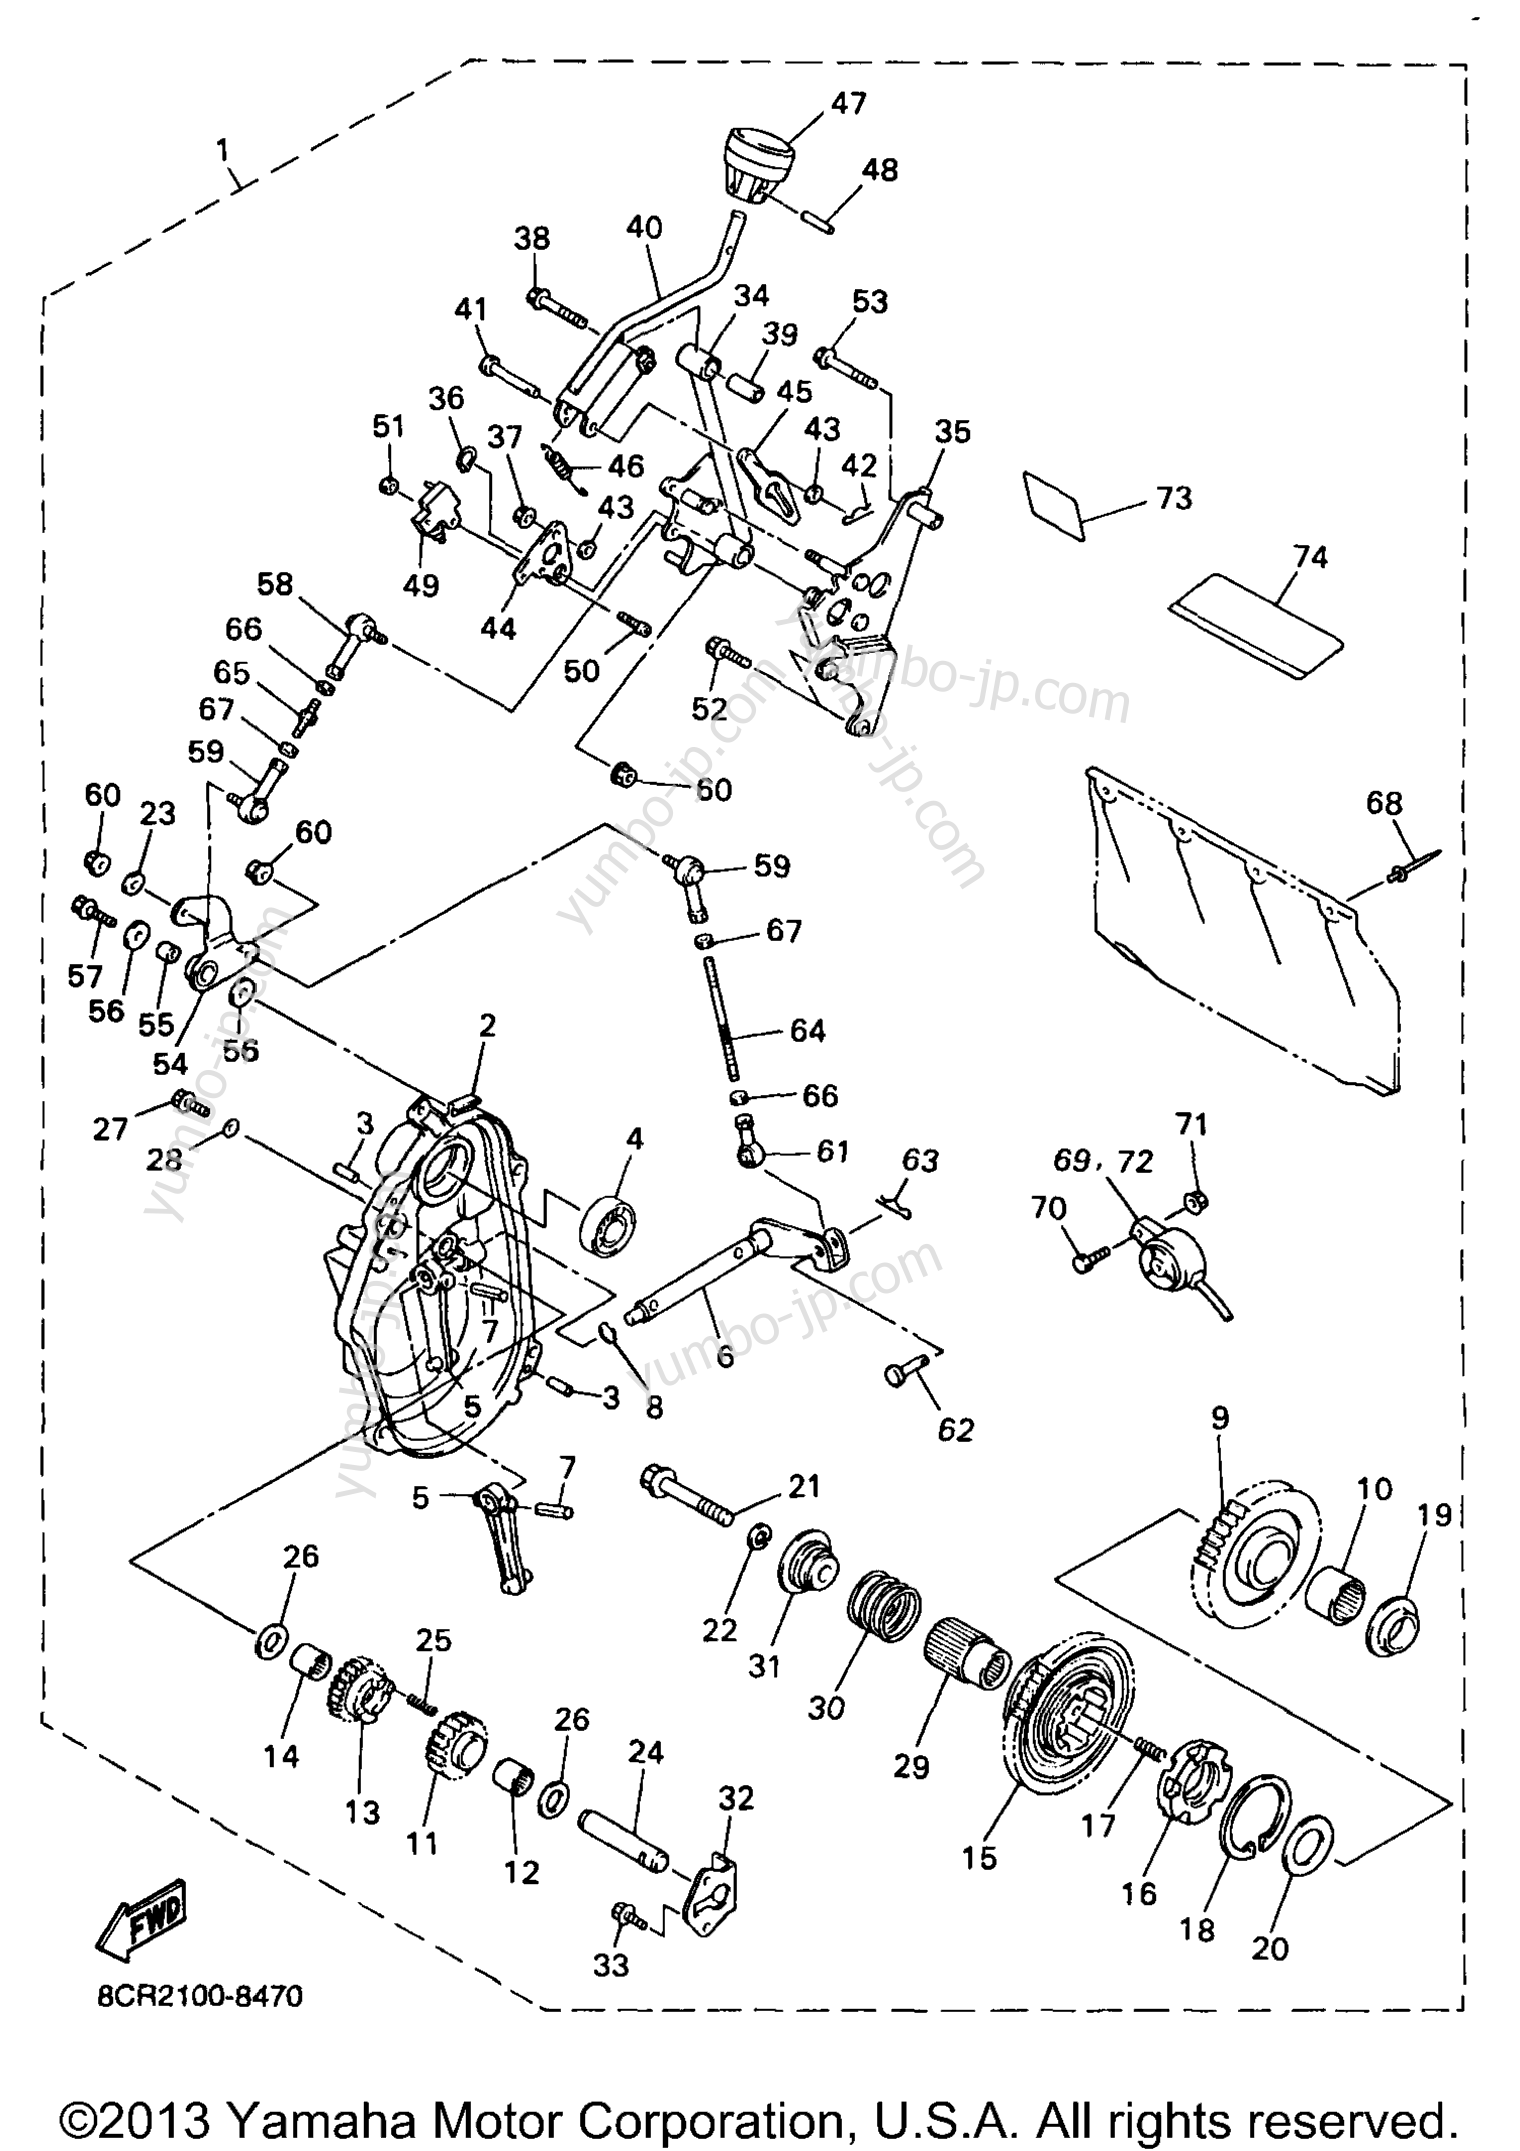 Alternate Reverse Gear Kit for snowmobiles YAMAHA VMAX 500 XT (VX500XTB) 1998 year